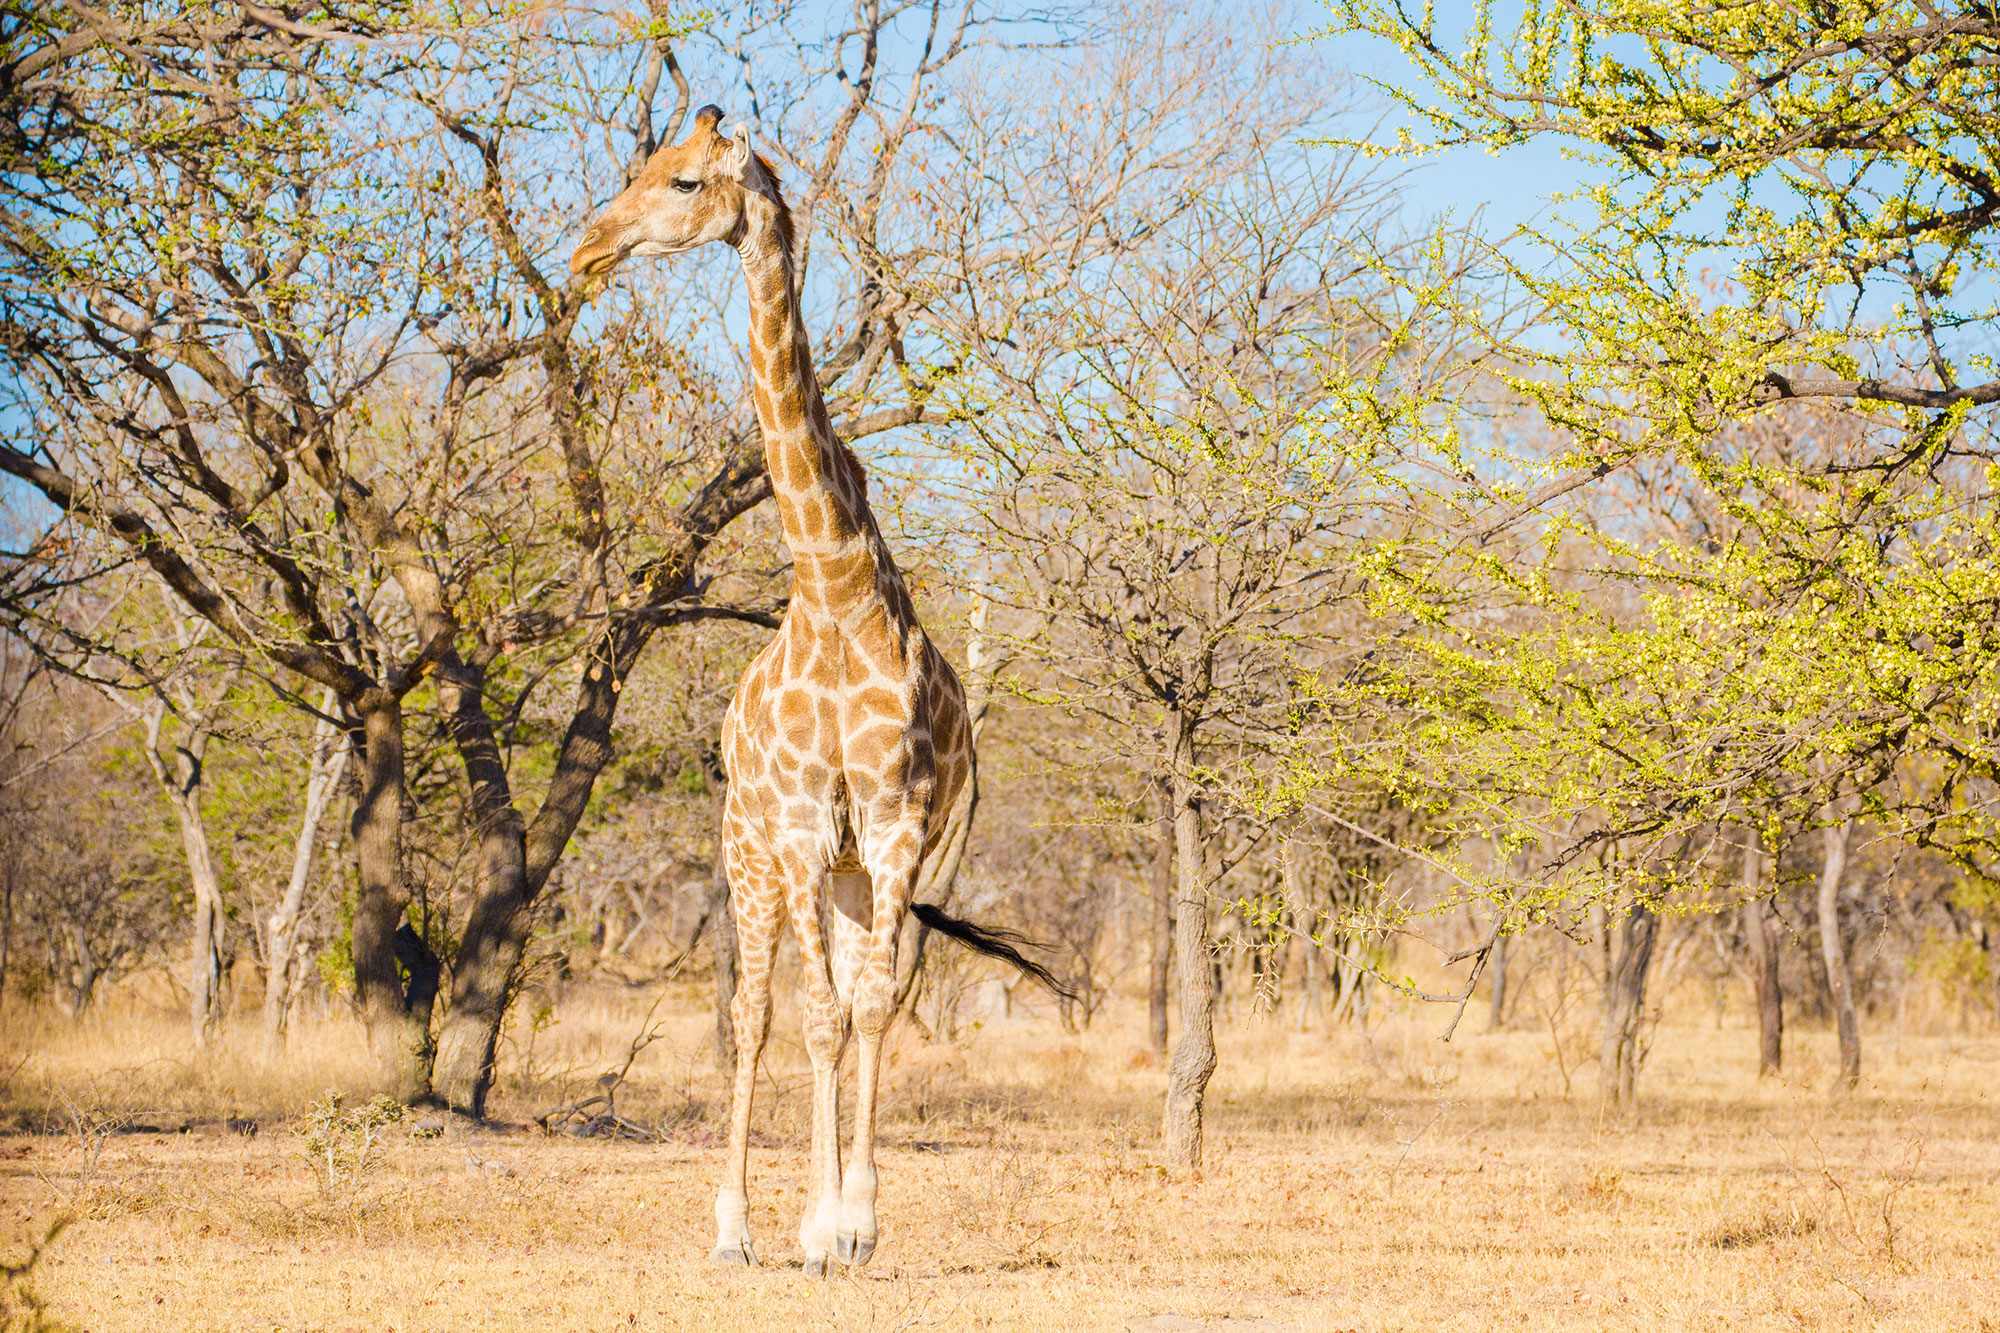 Giraffe on Safari Ant's Hill & Nest in South Africa